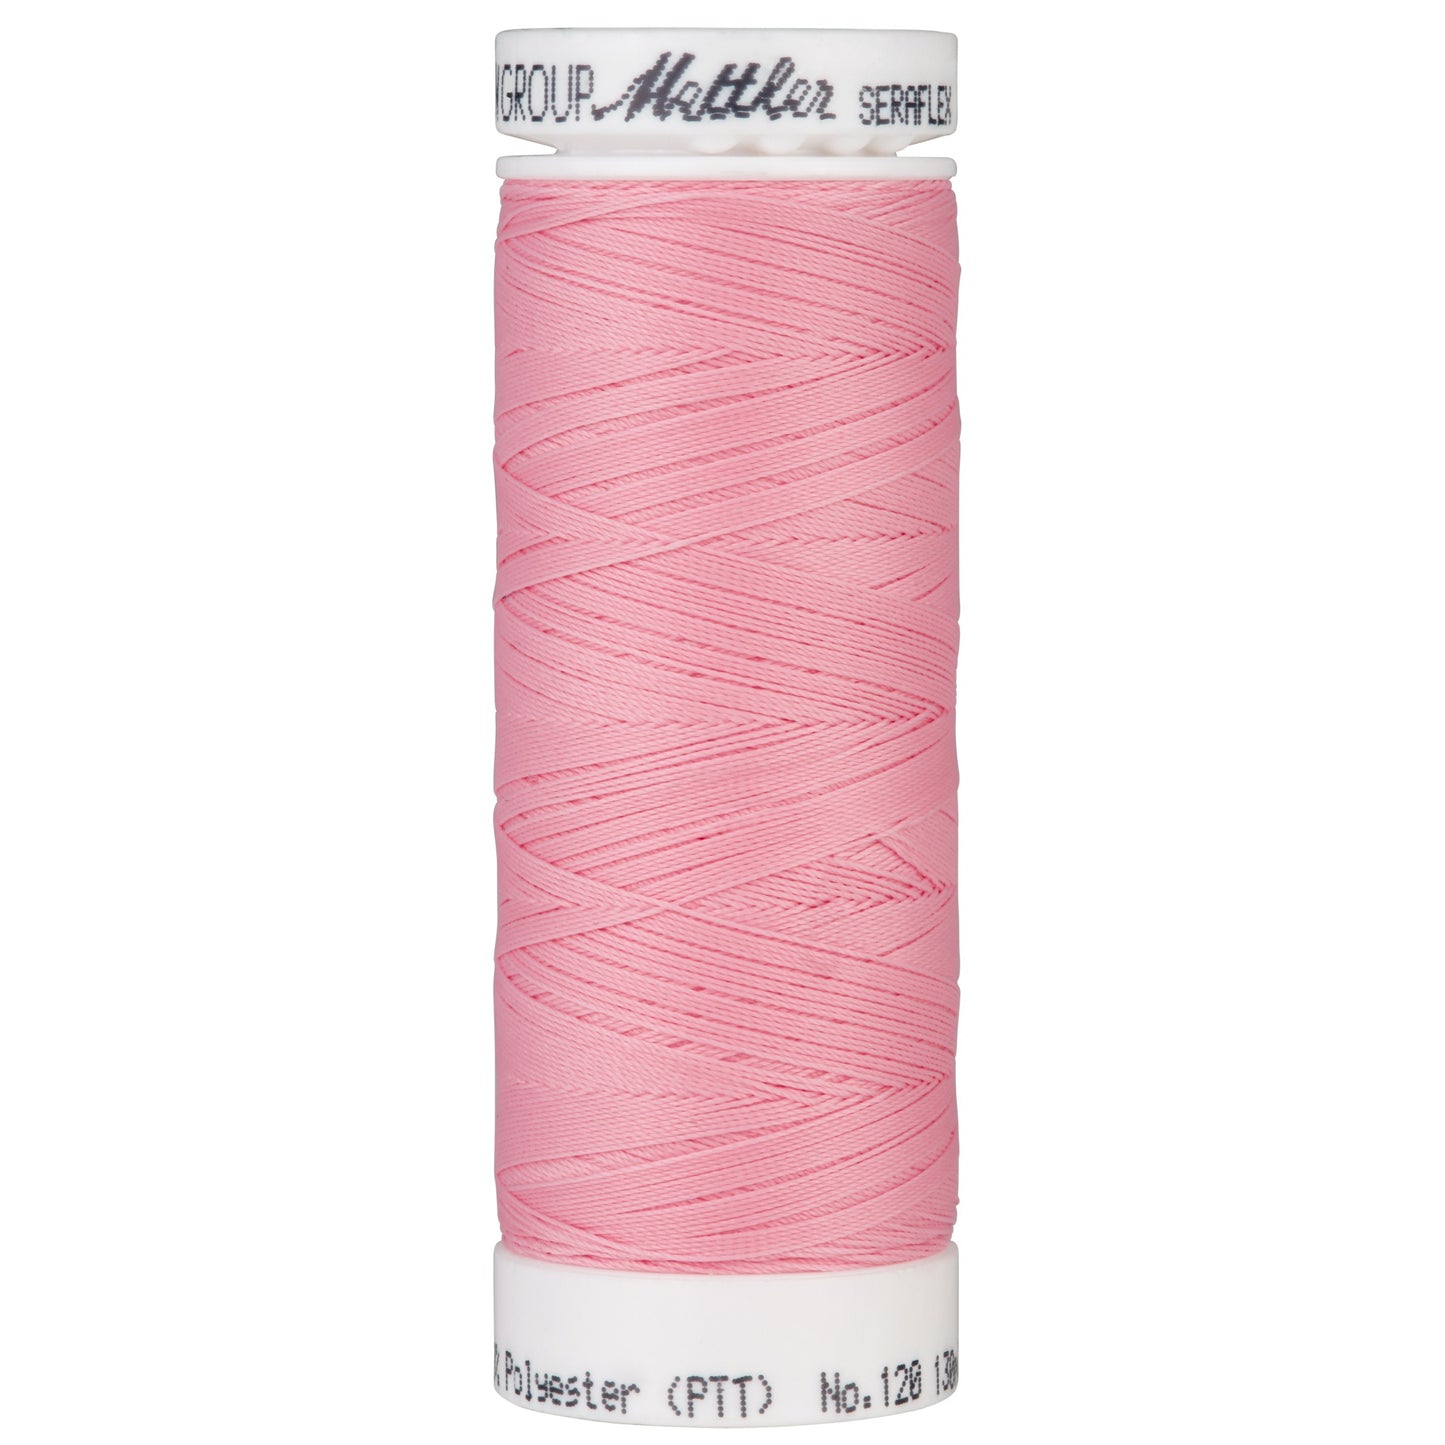 Seraflex - Mettler - Stretch Thread - For Stretchy Seams - 130 Meters - Petal Pink